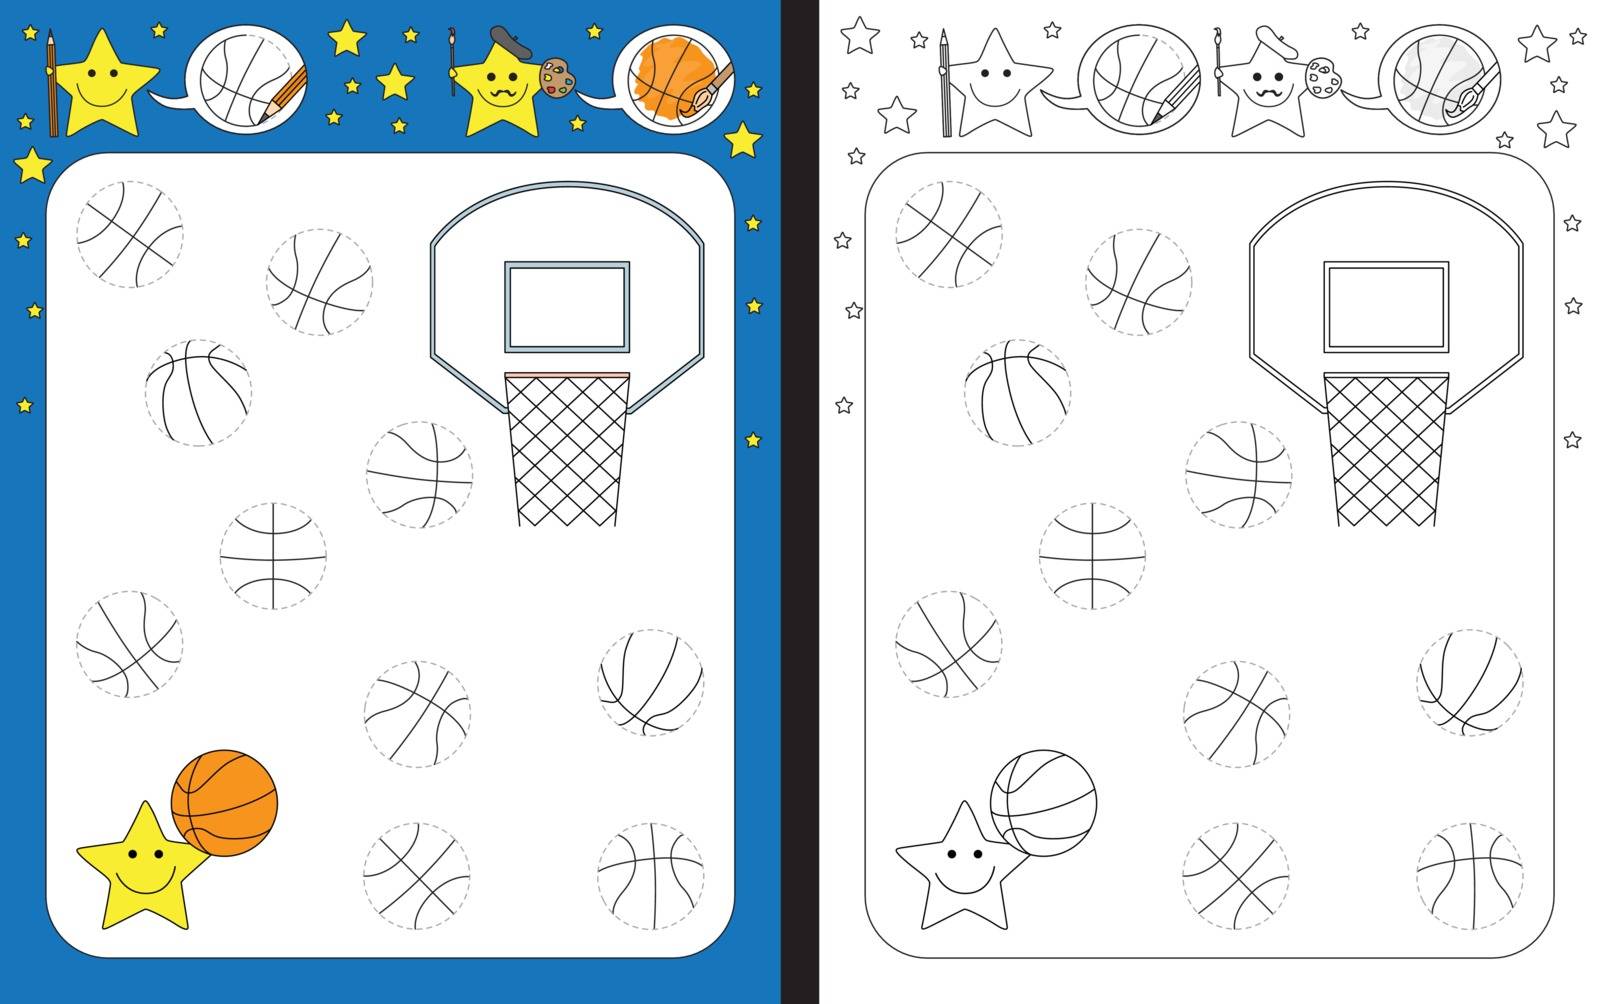 Preschool worksheet for practicing fine motor skills - tracing dashed lines - finish the illustration of basketballs